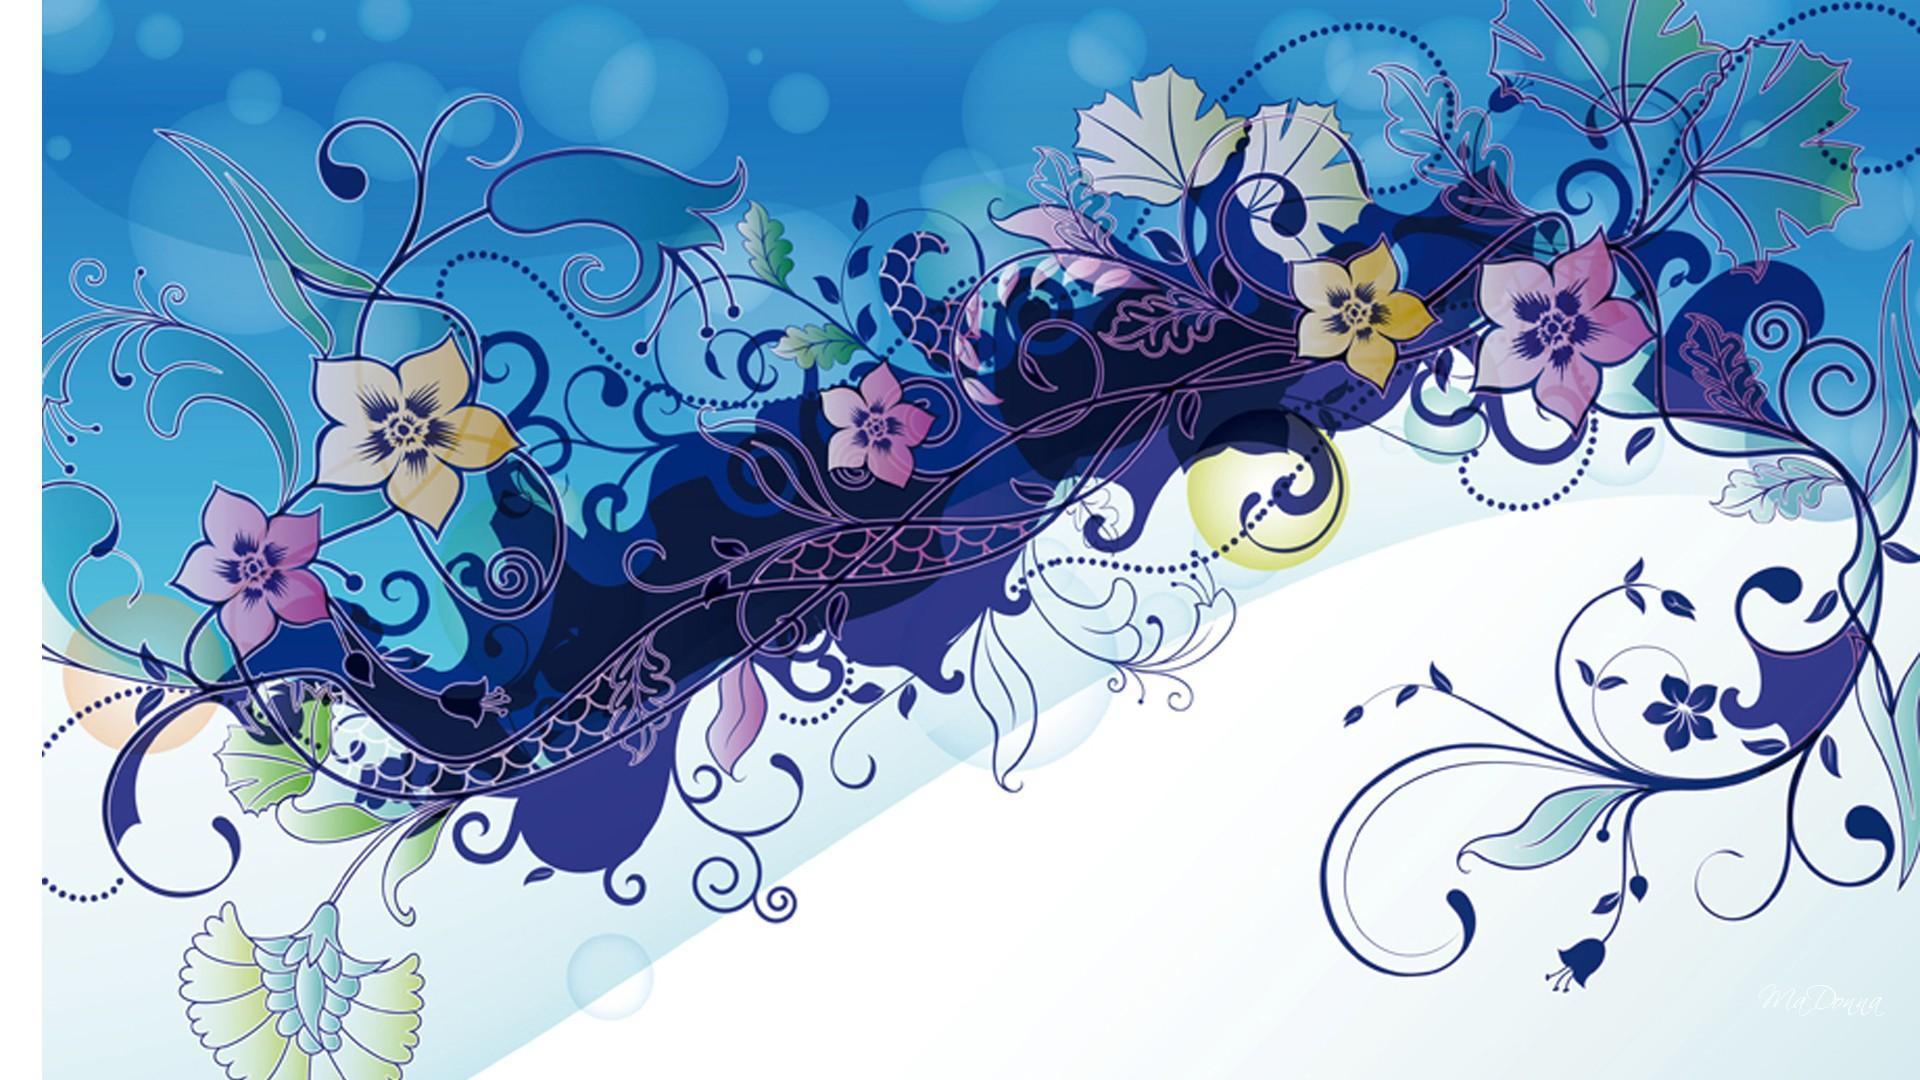 Floral Abstract In Blues HD desktop wallpaper, Widescreen, High